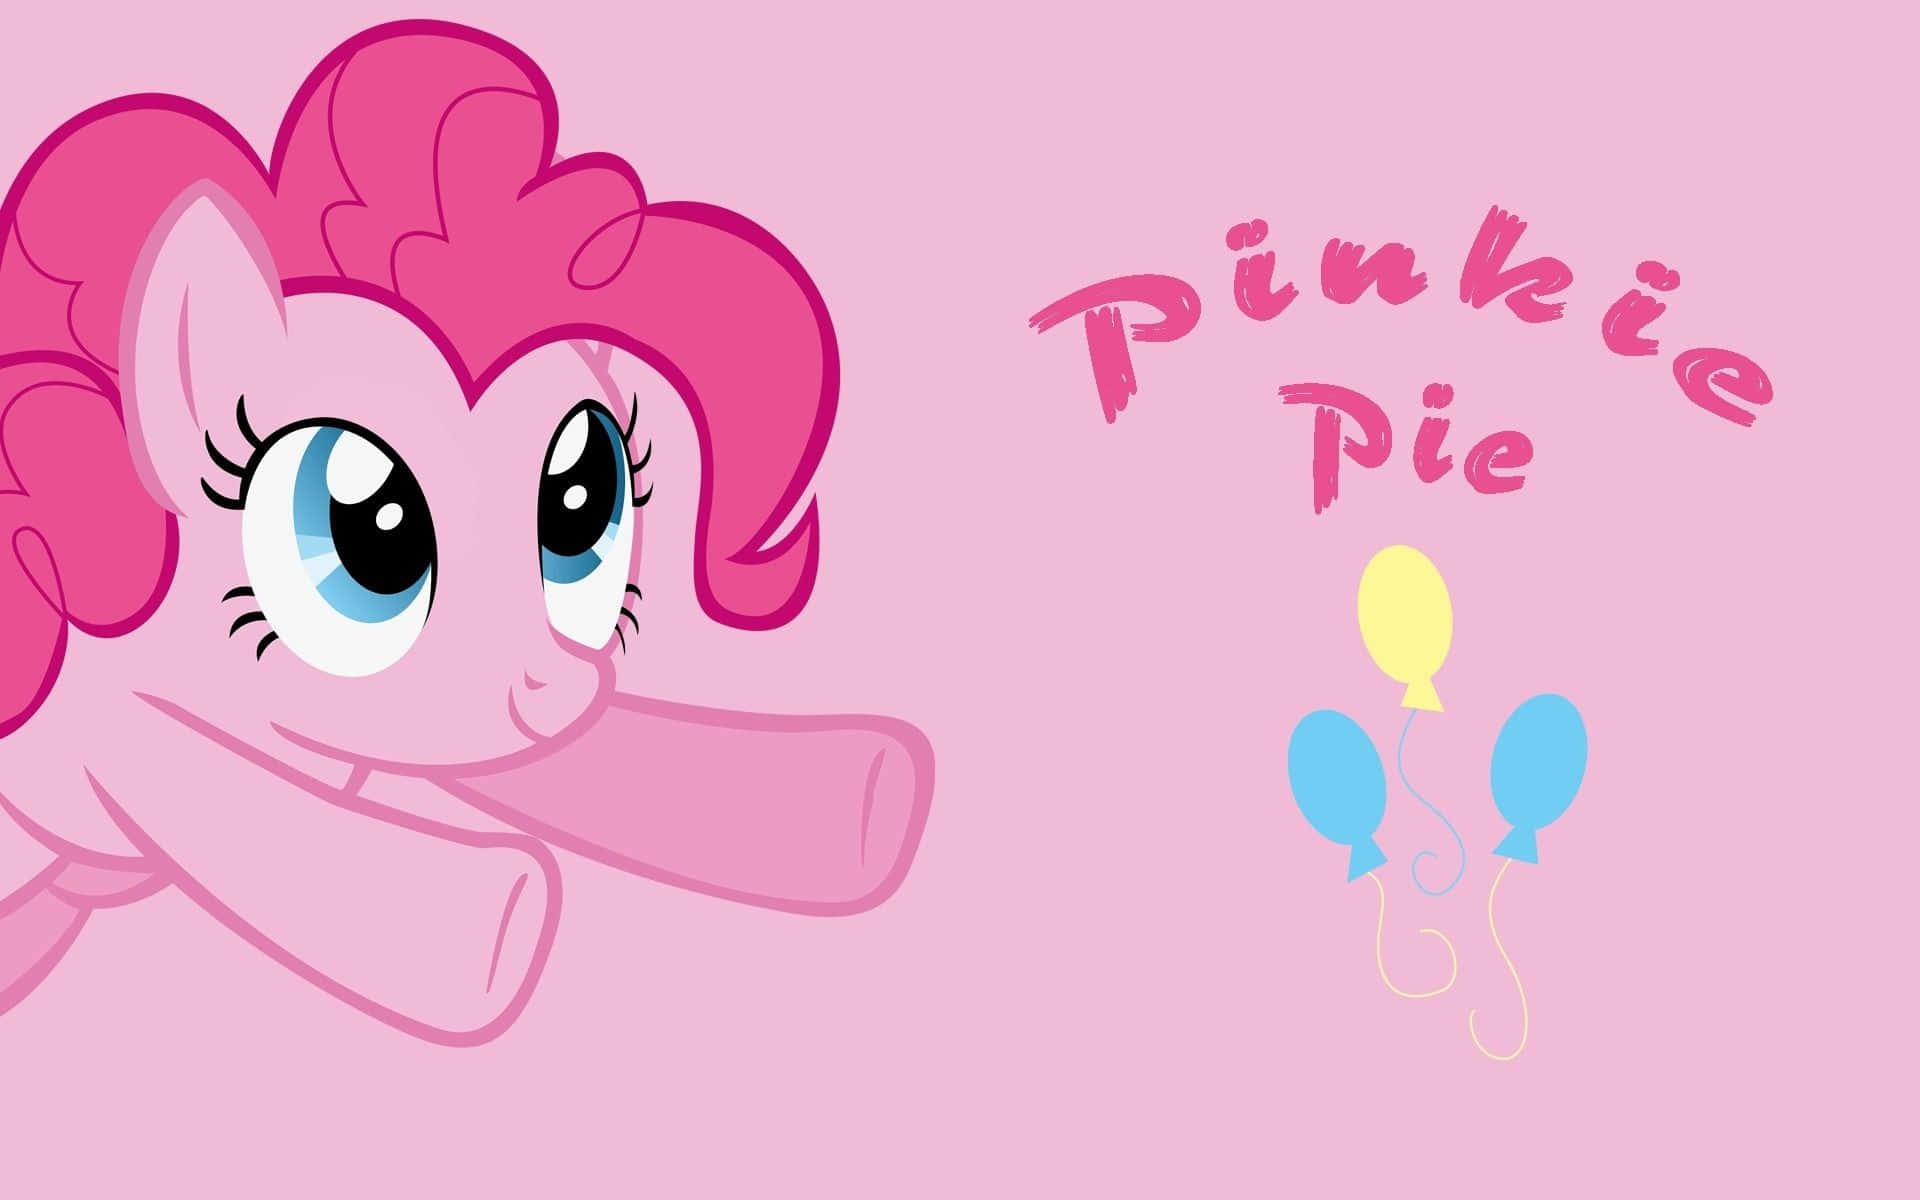 Pinkie Pie brings a smile to everyone!